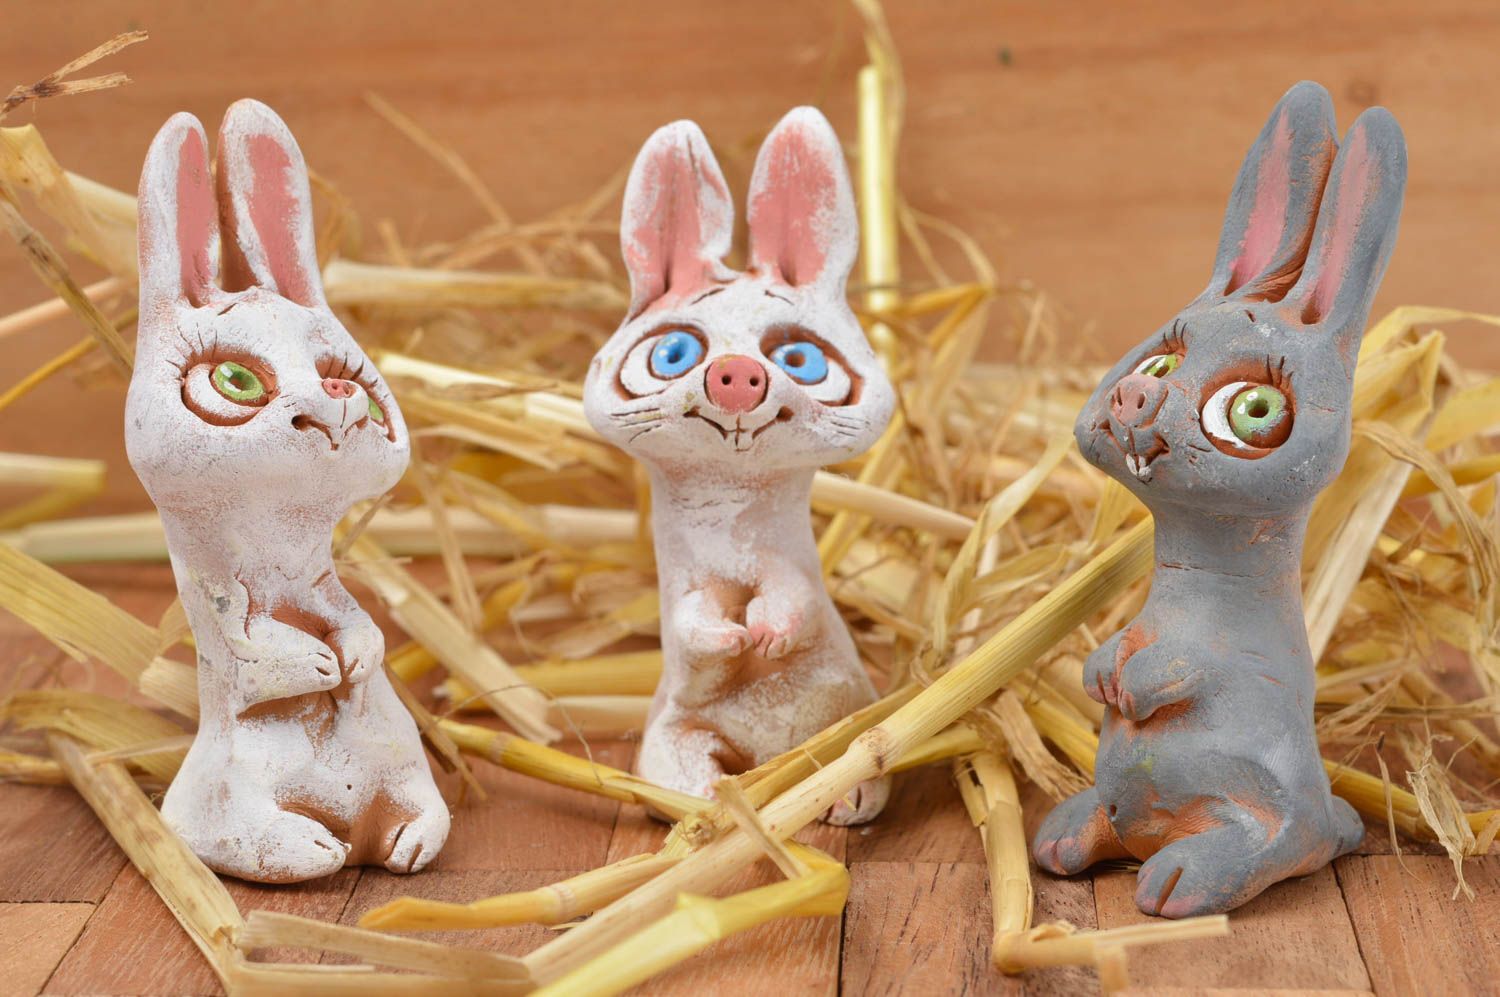 Handmade designer statuette 3 ceramic rabbits unusual home decor ideas photo 1